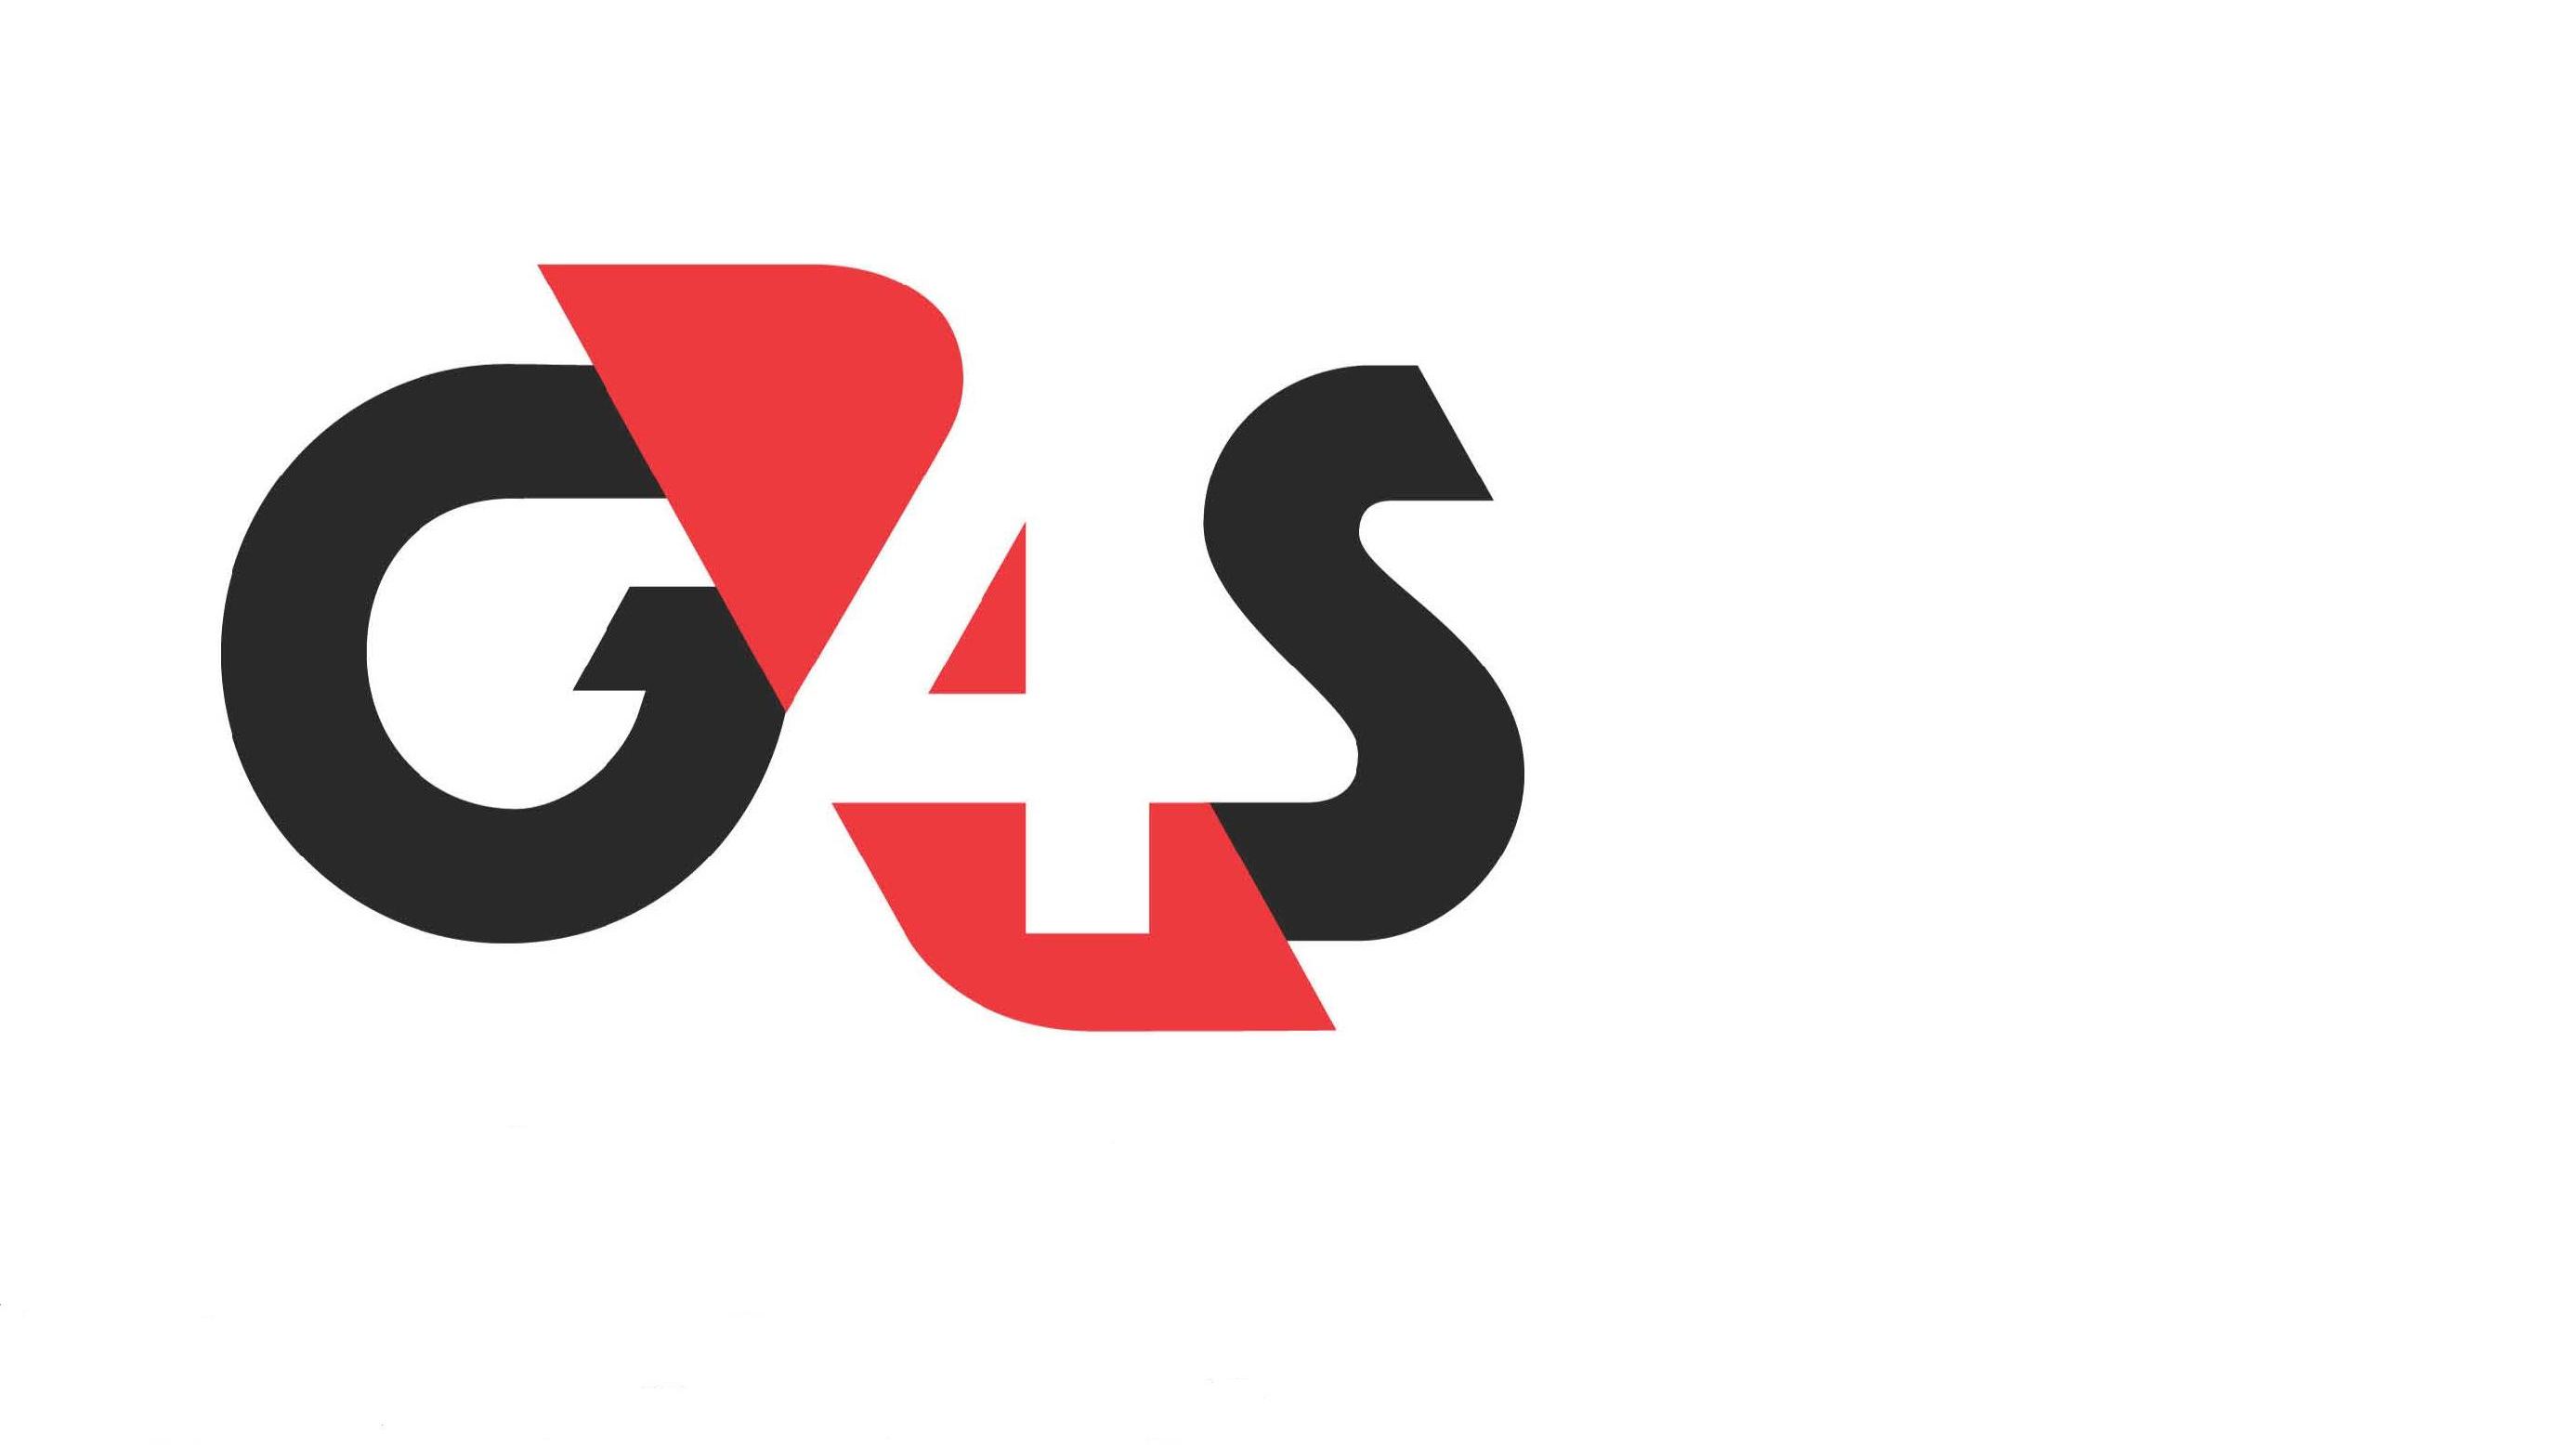 G4S-logo-for-website-feature-2.jpg